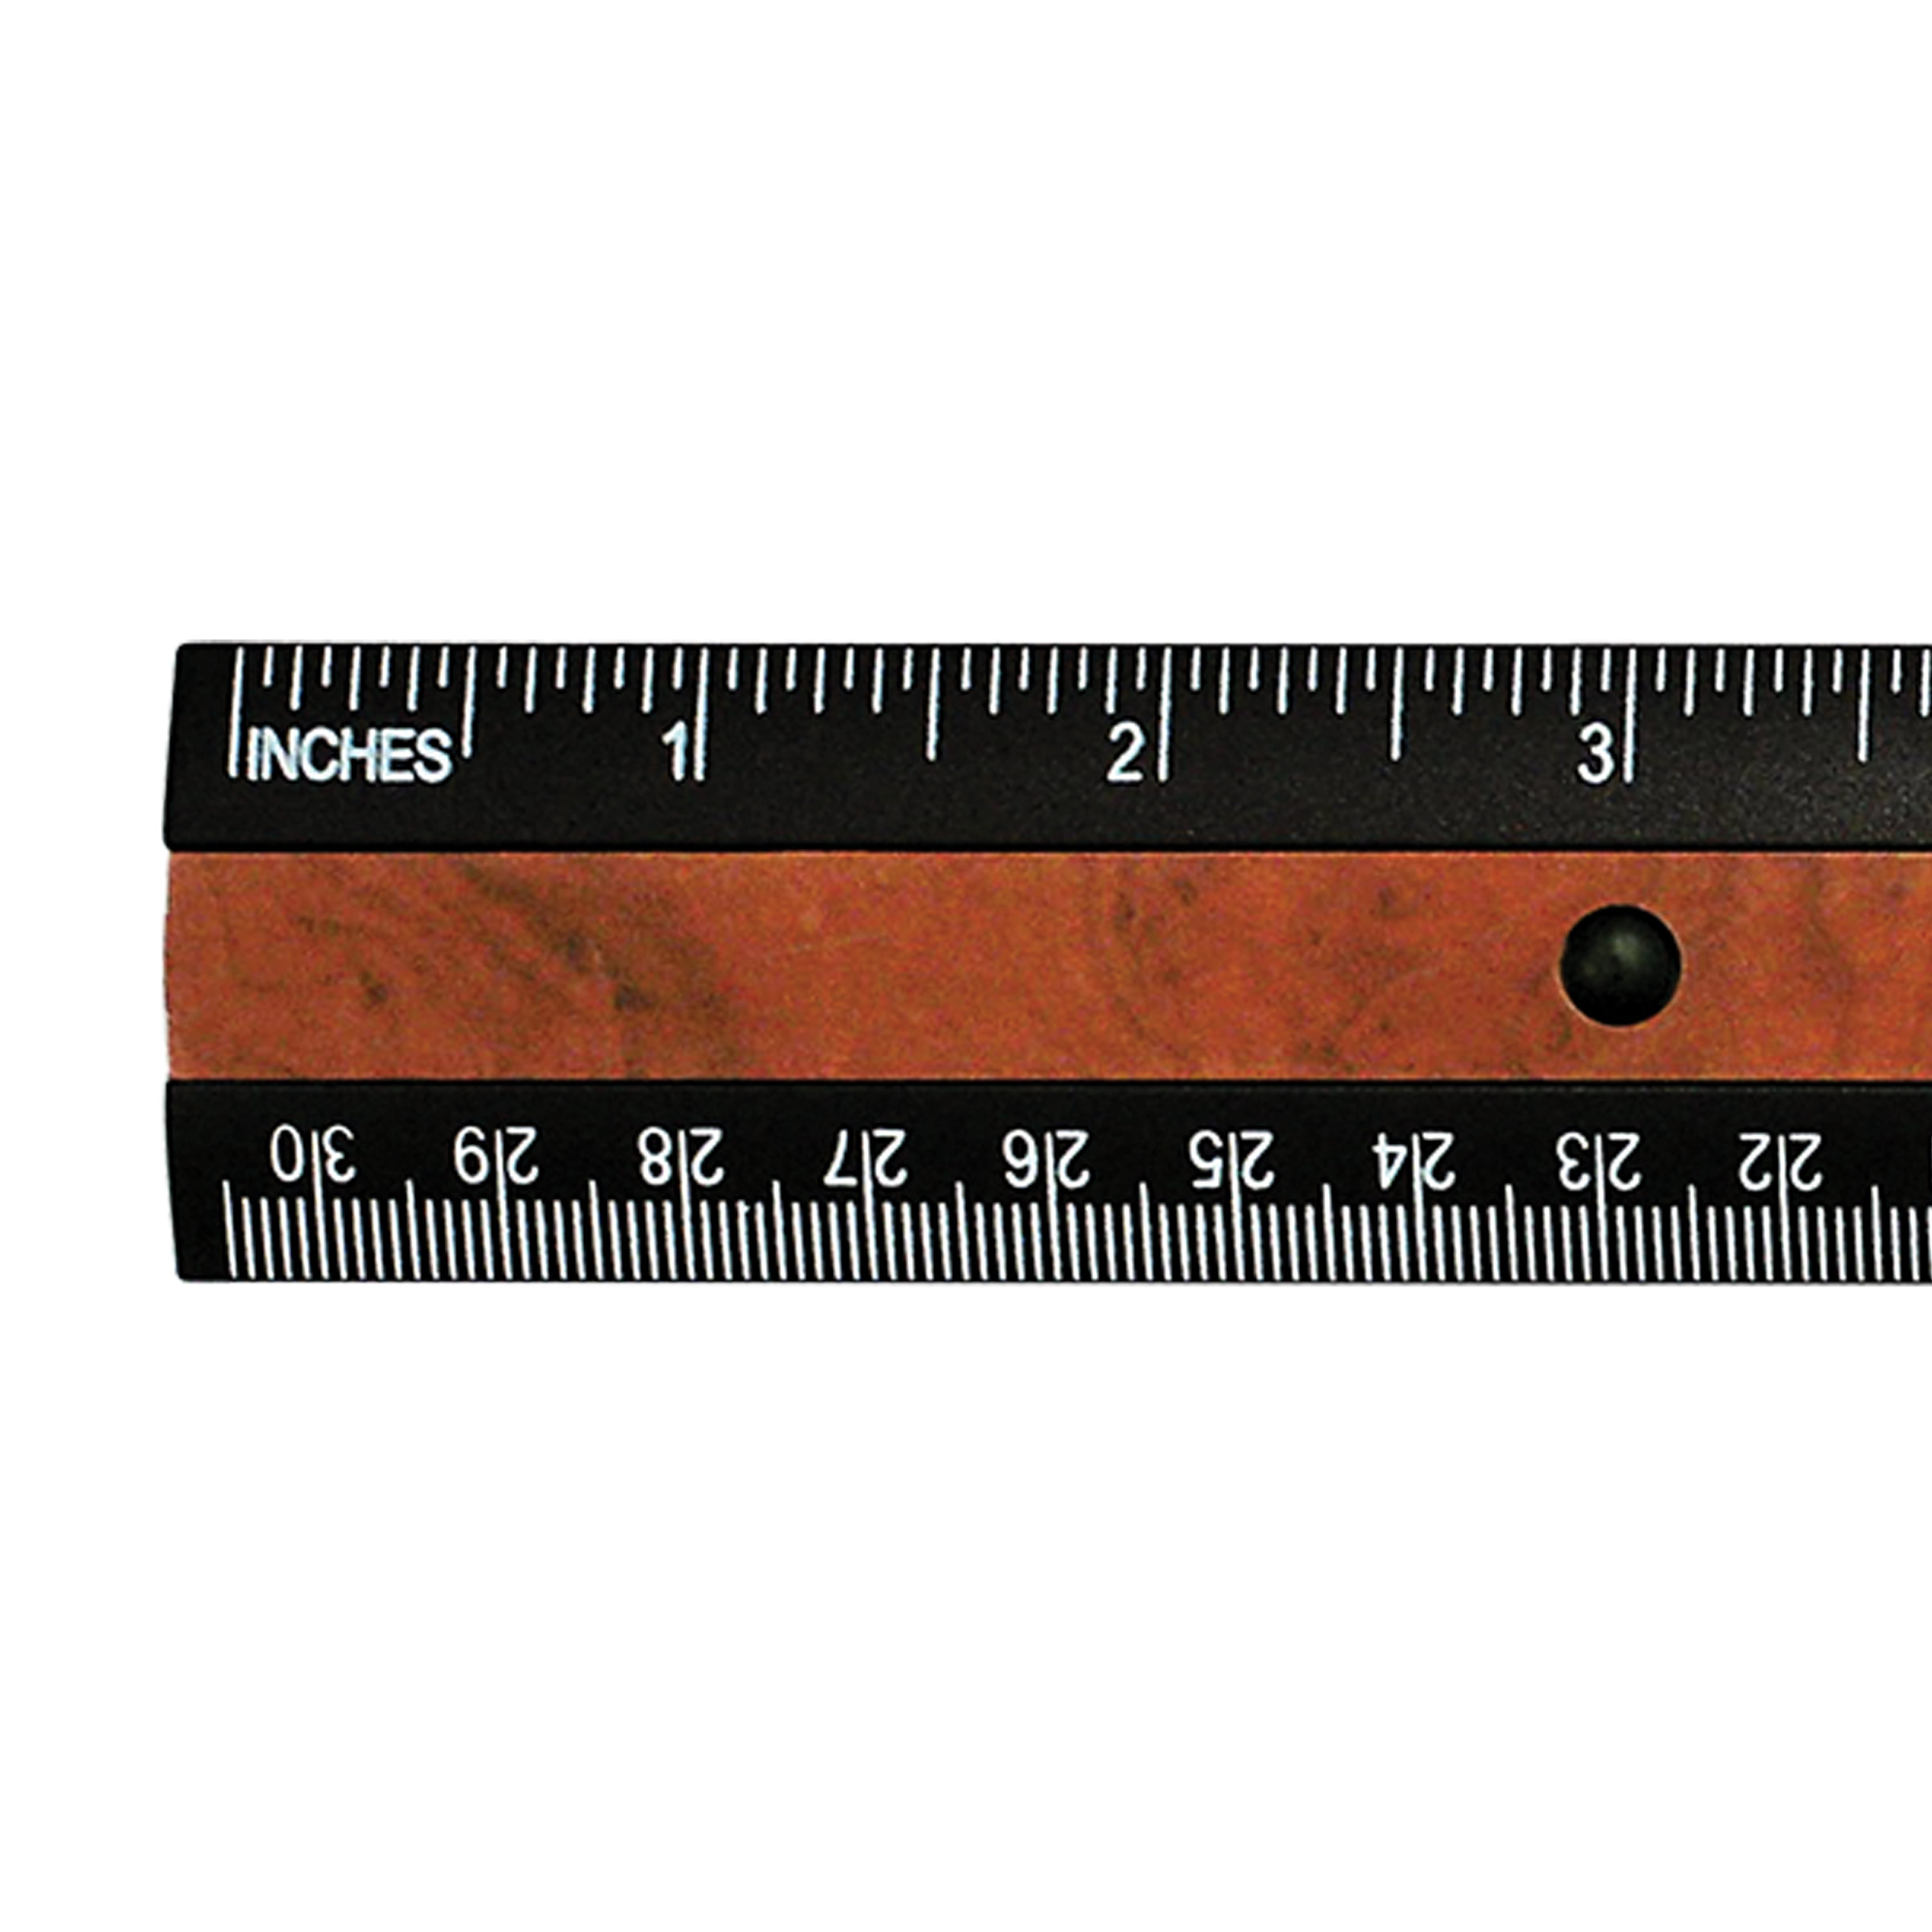 12 Magnifying Ruler by Westcott® ACM15571